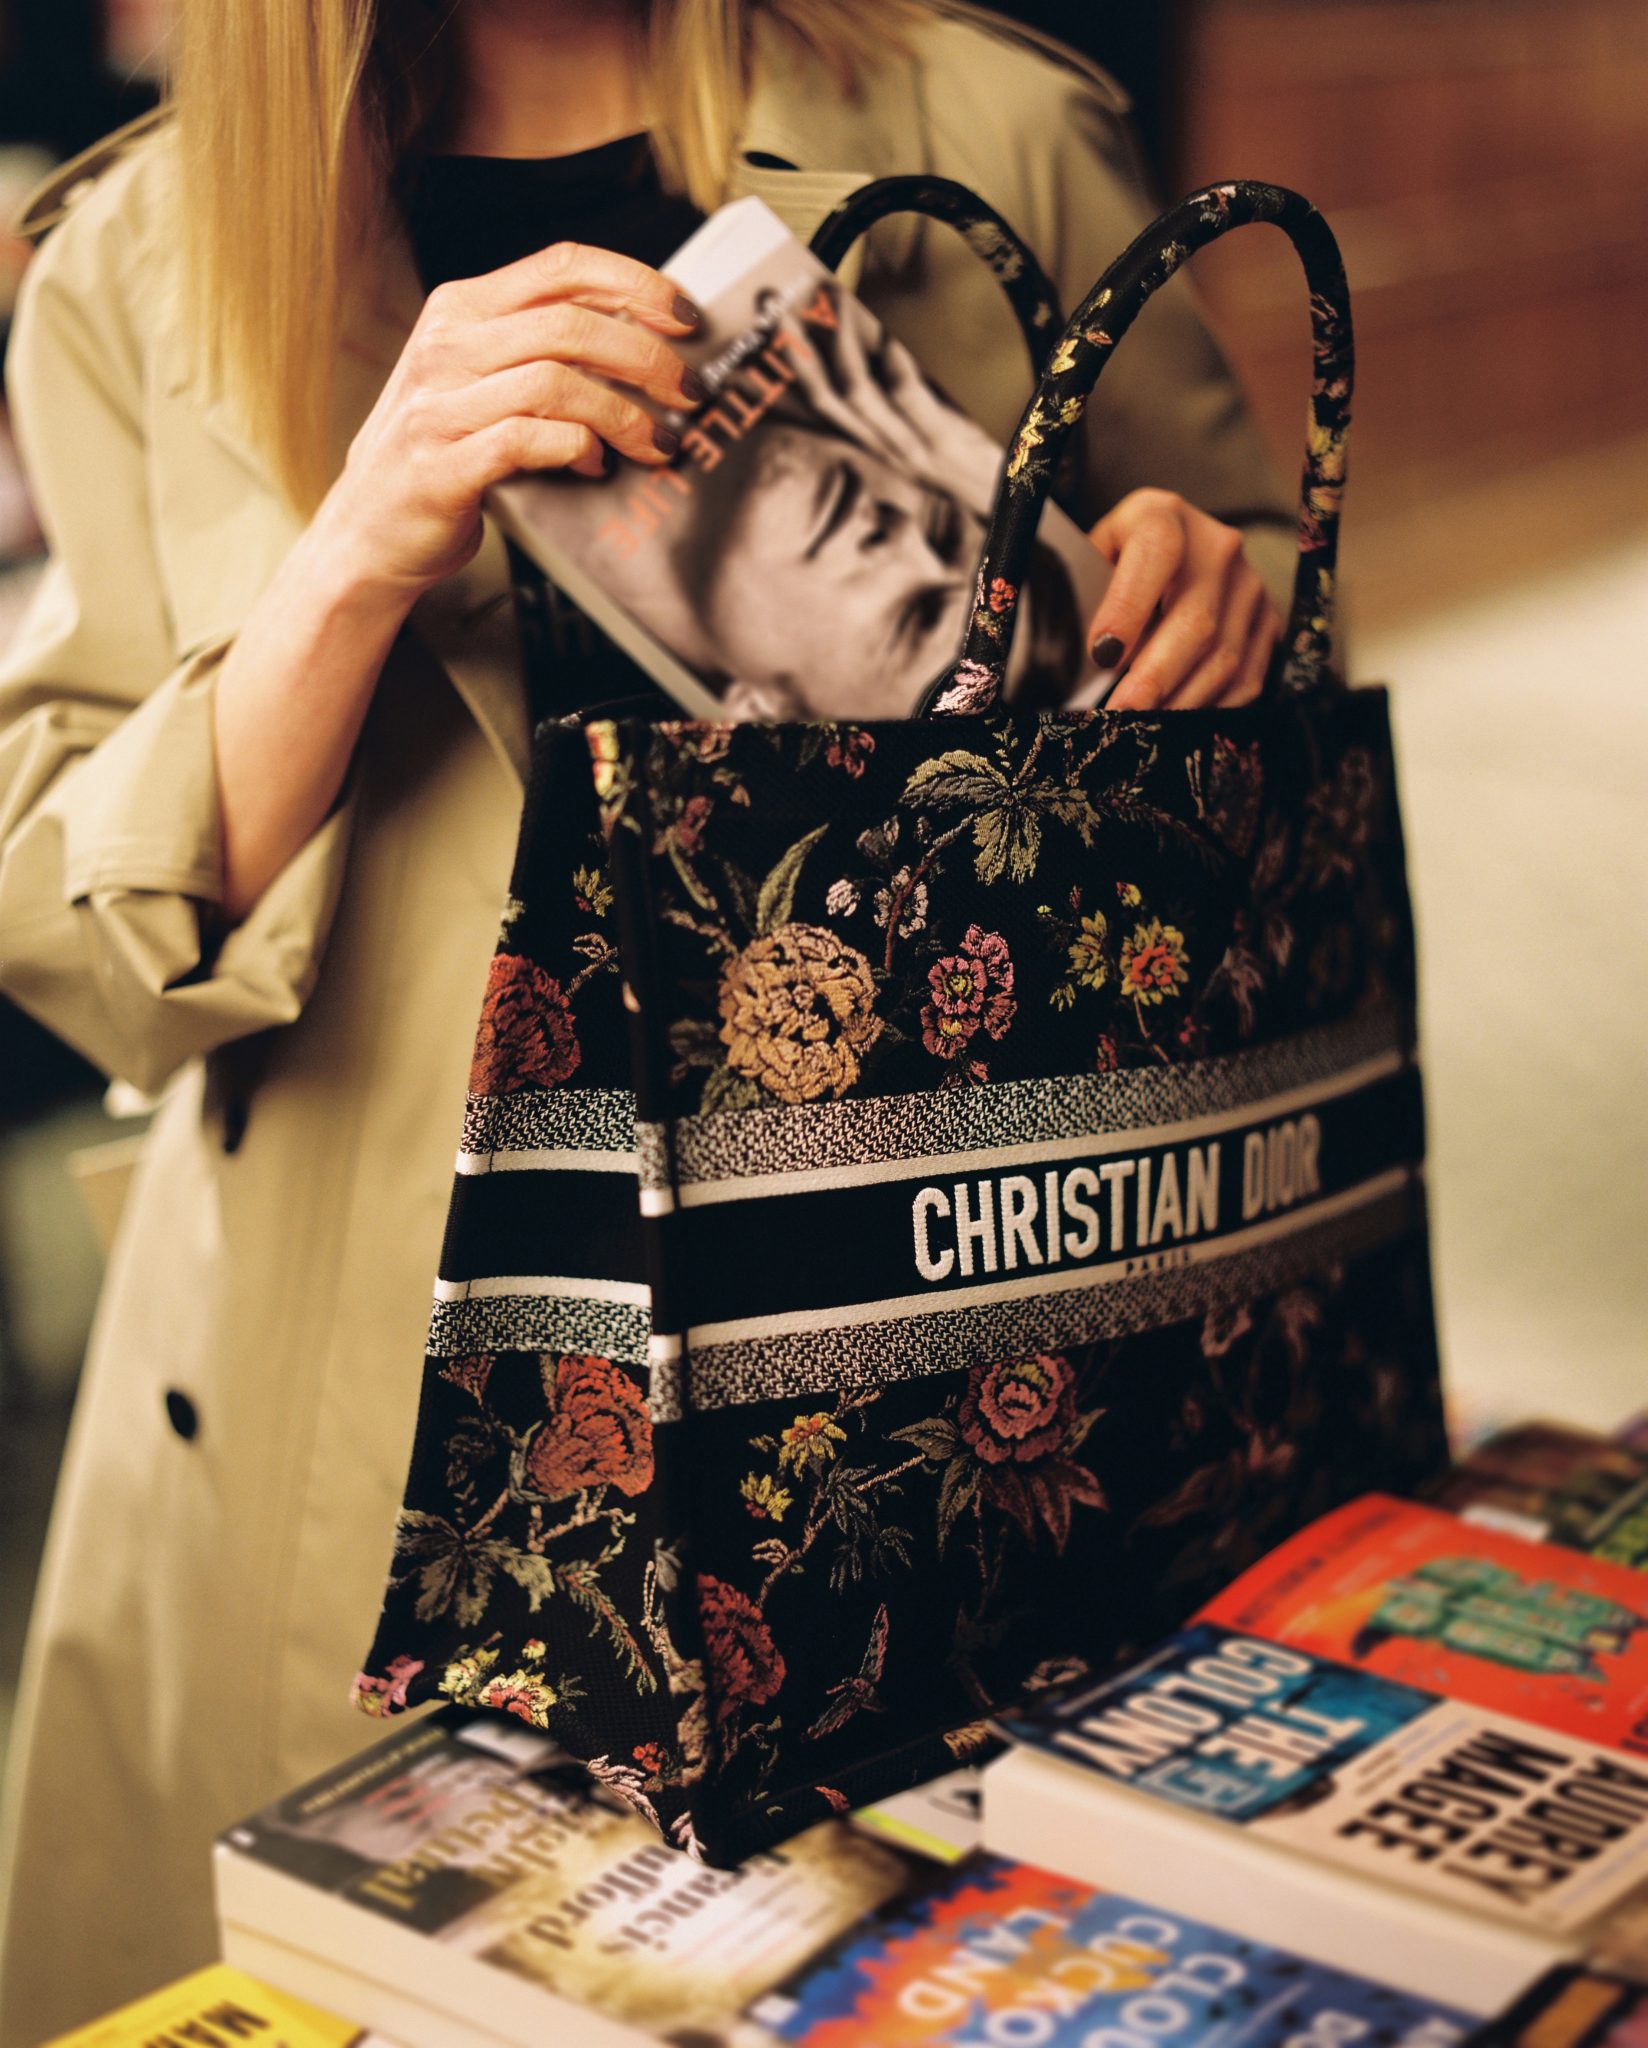 Christian Dior book tote bag